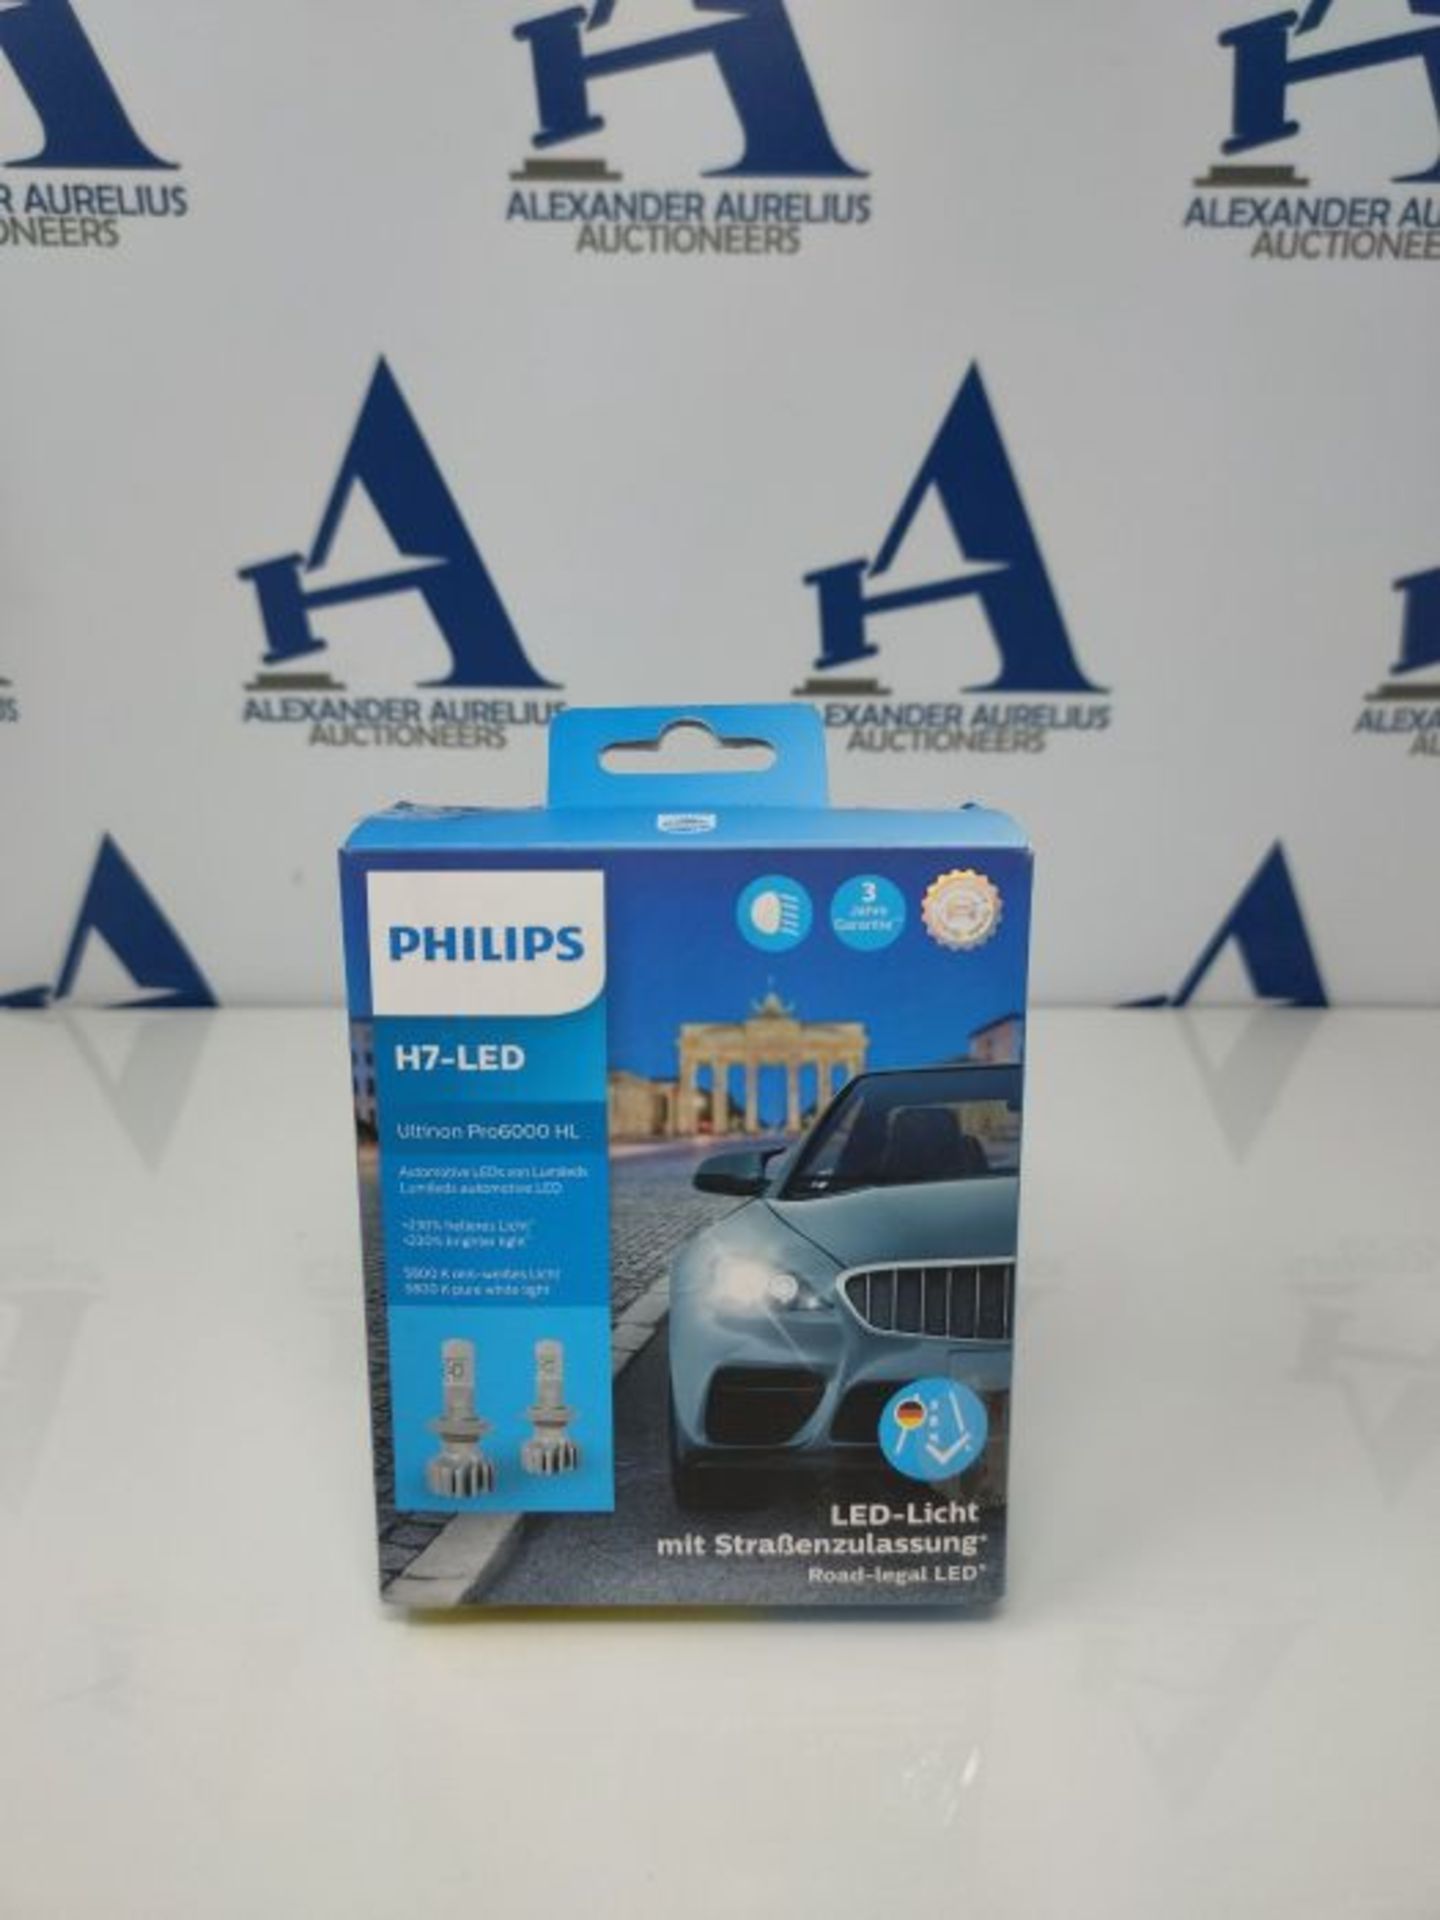 RRP £110.00 Philips Ultinon Pro6000 H7-LED Scheinwerferlampe mit Straßenzulassung, +230% helleres - Image 2 of 3